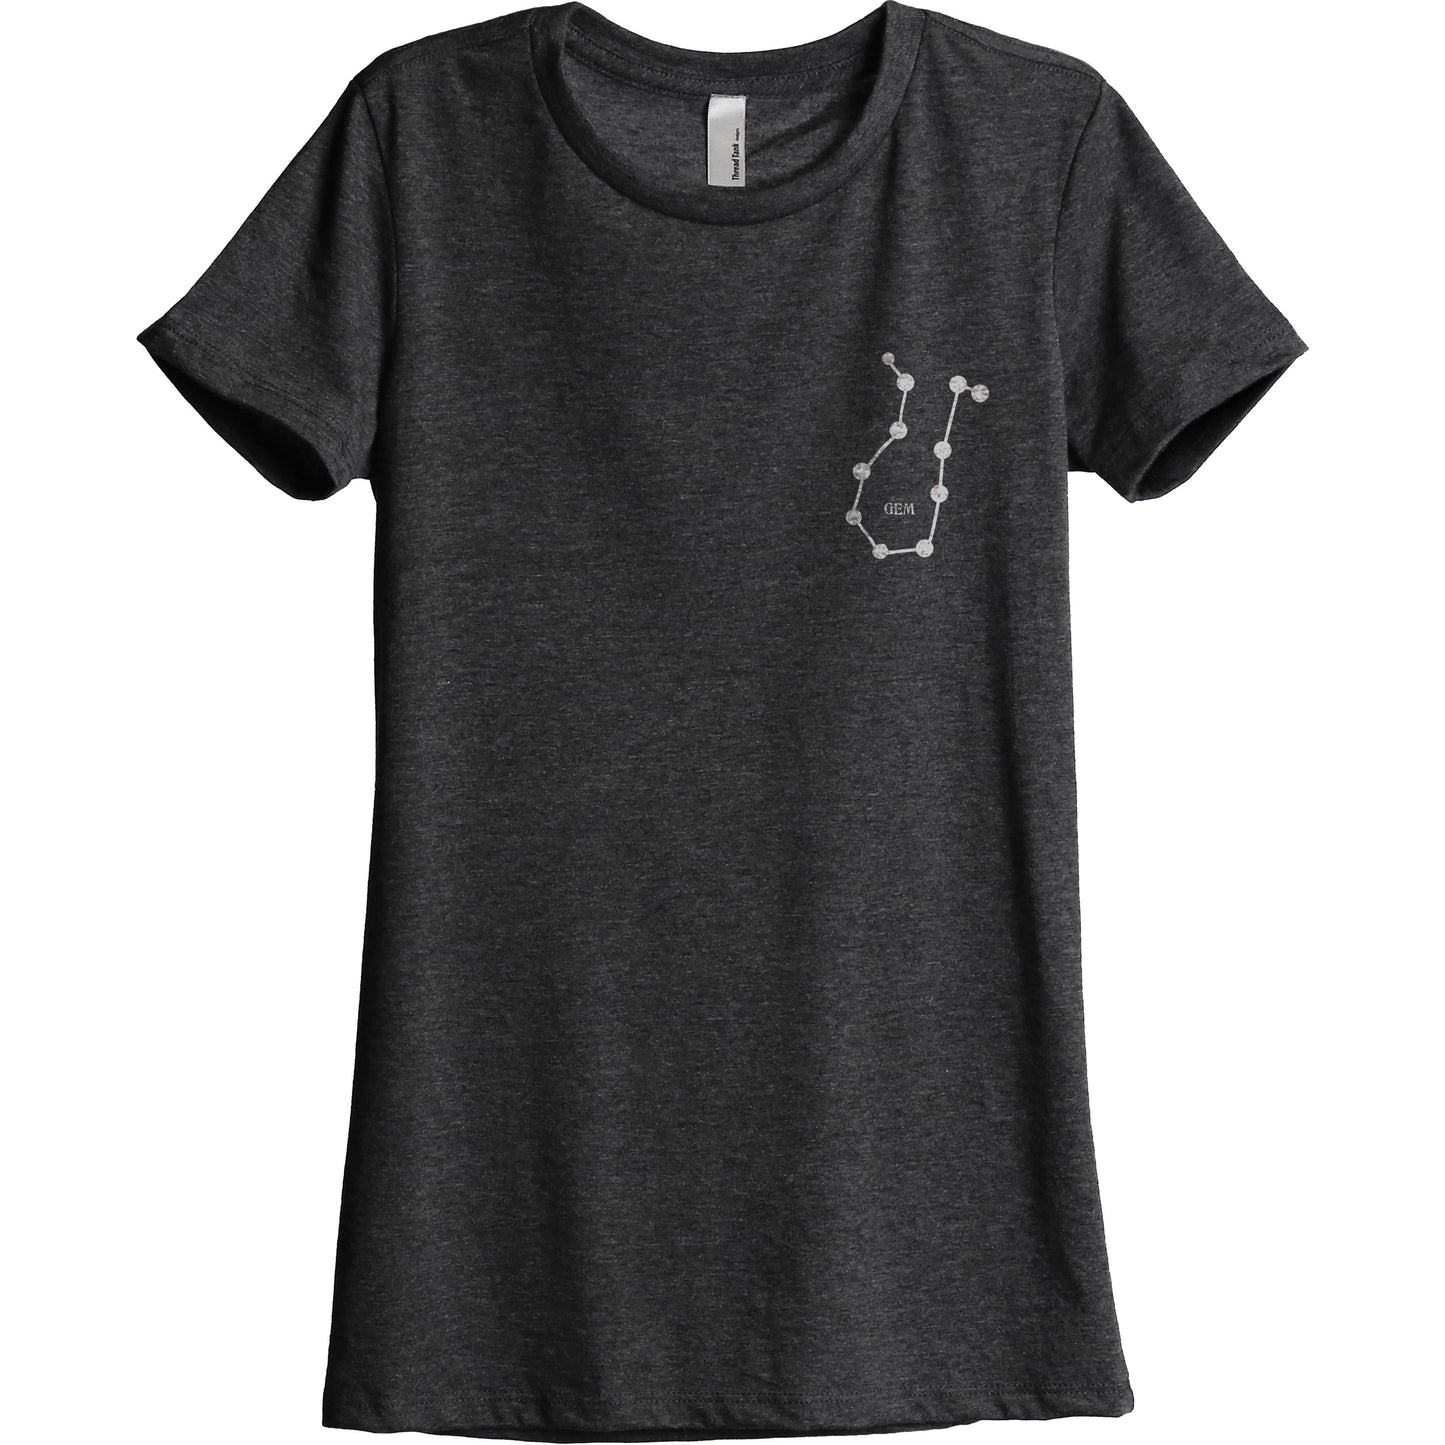 Gemini GEM Constellation Astrology Women's Relaxed Crewneck T-Shirt Top Tee Charcoal Grey
